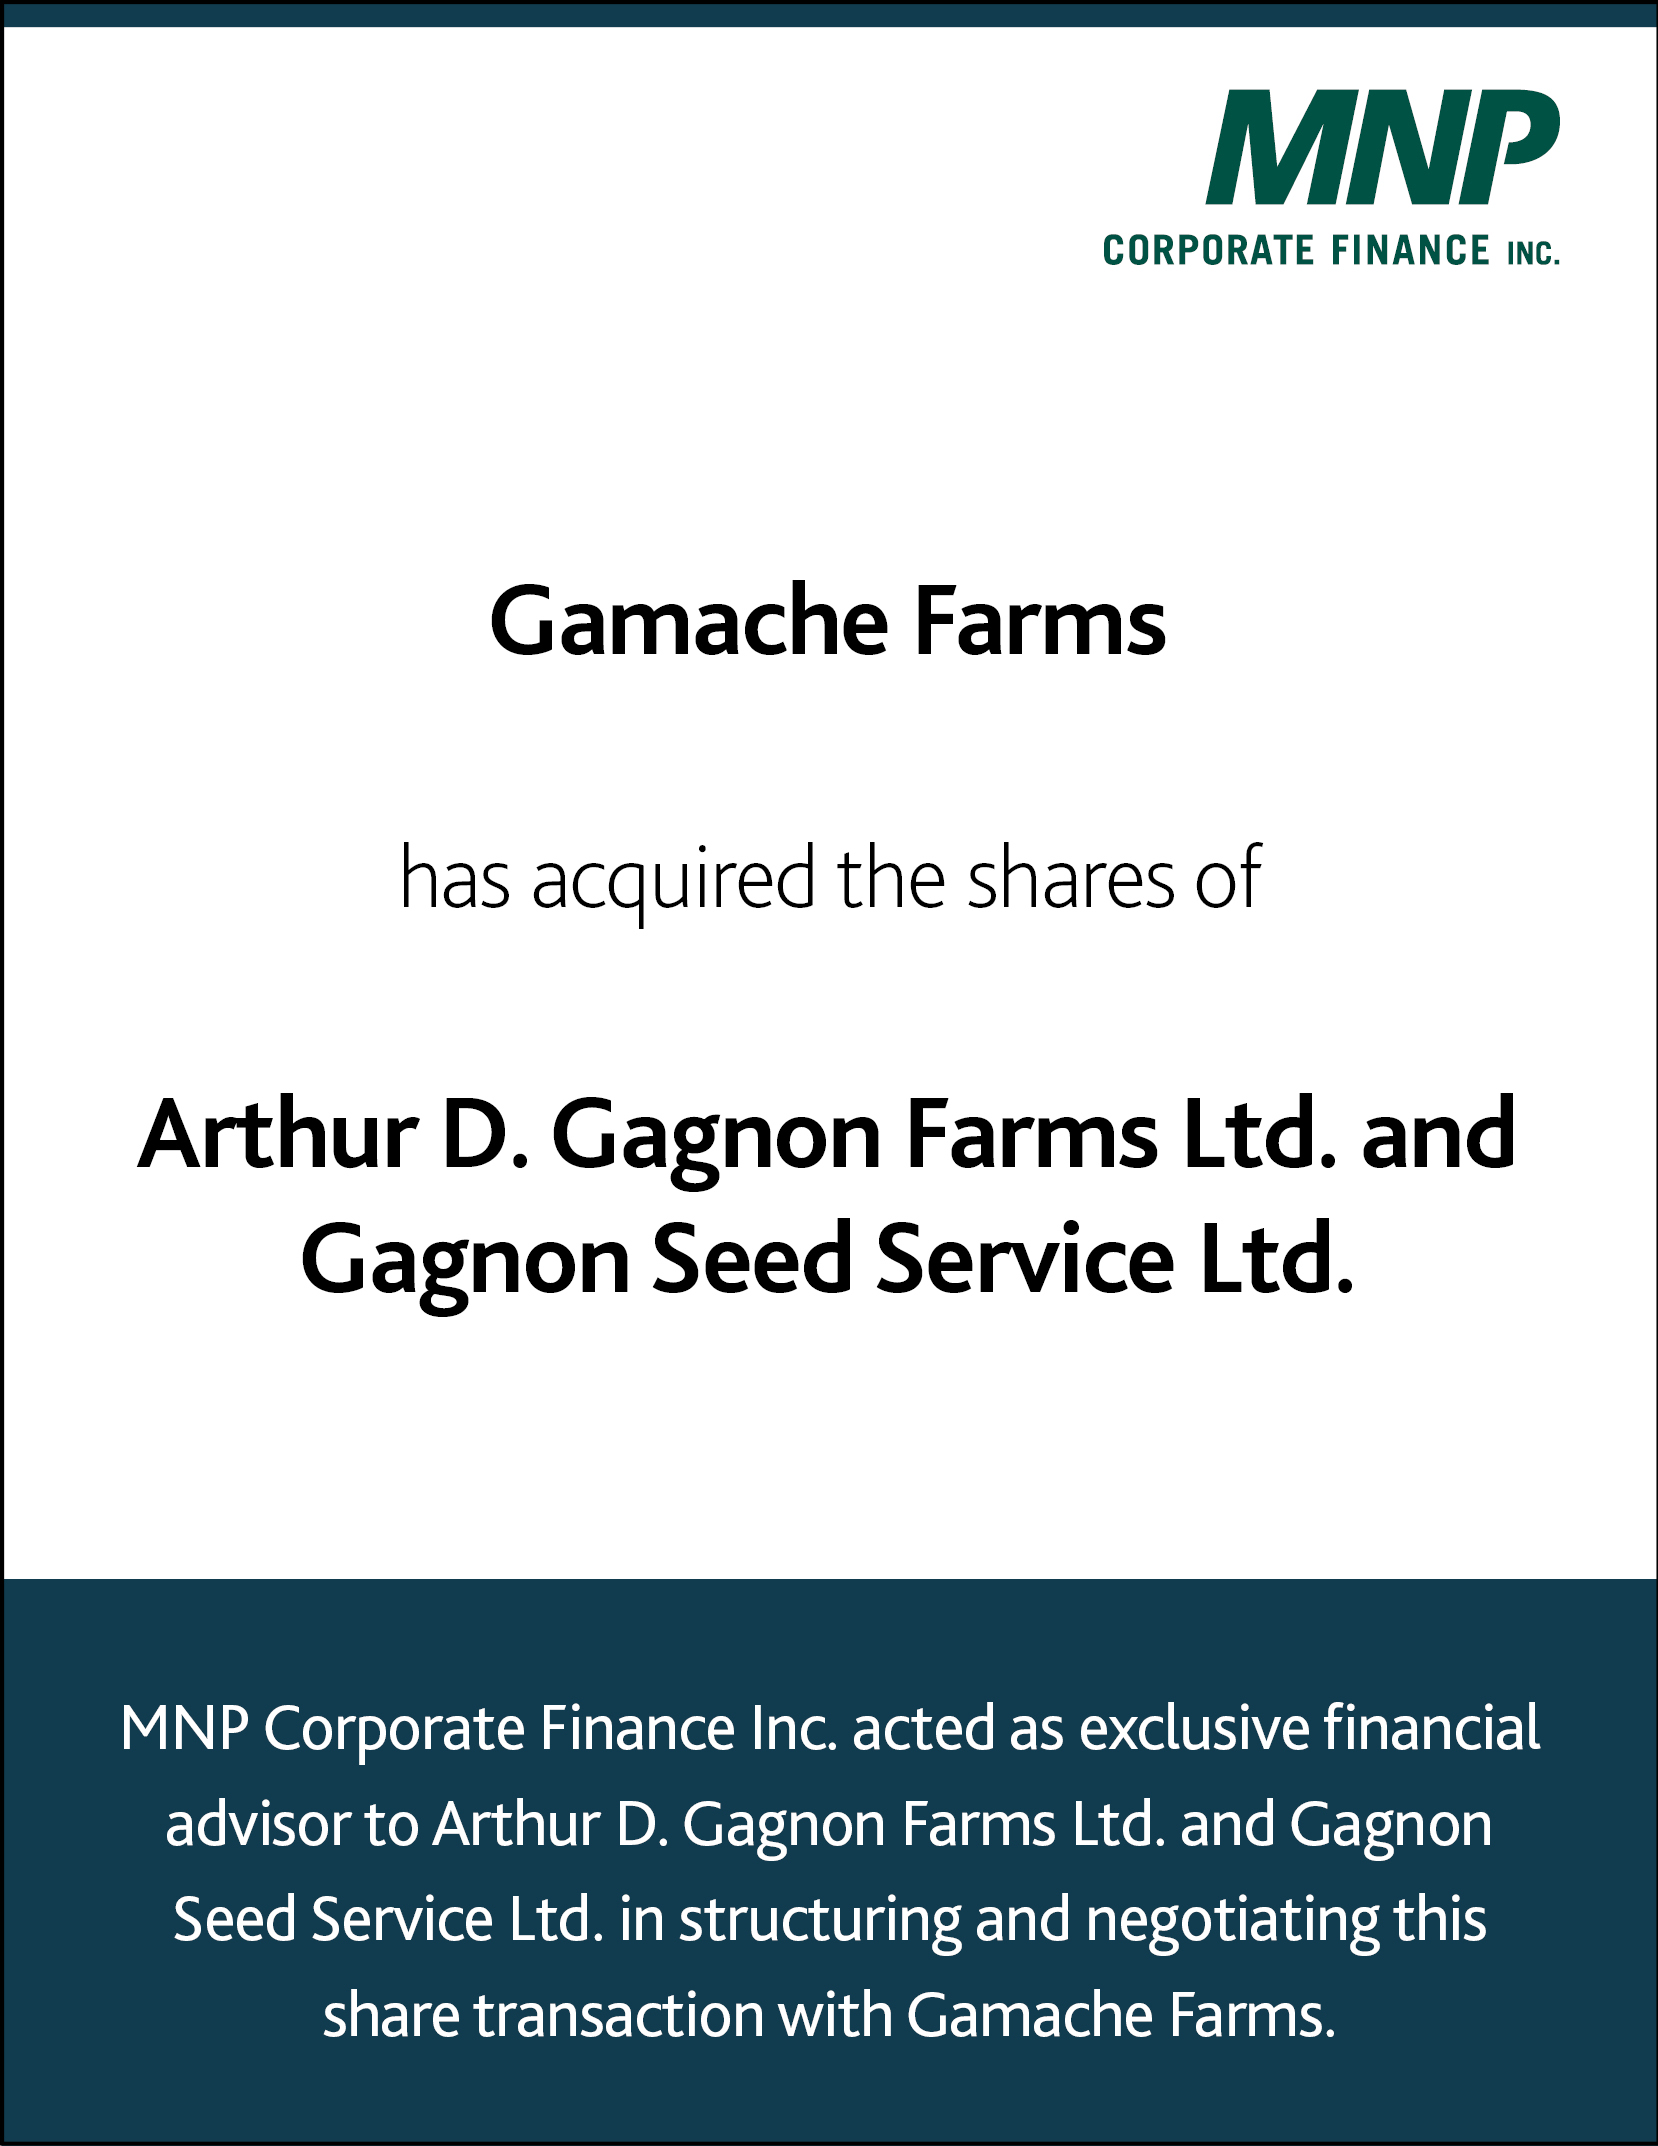 Gamache Farms has acquired the shares of Arthur D. Gagnon Farms Ltd. and Gagnon Seed Service Ltd. (Gagnon Farms).